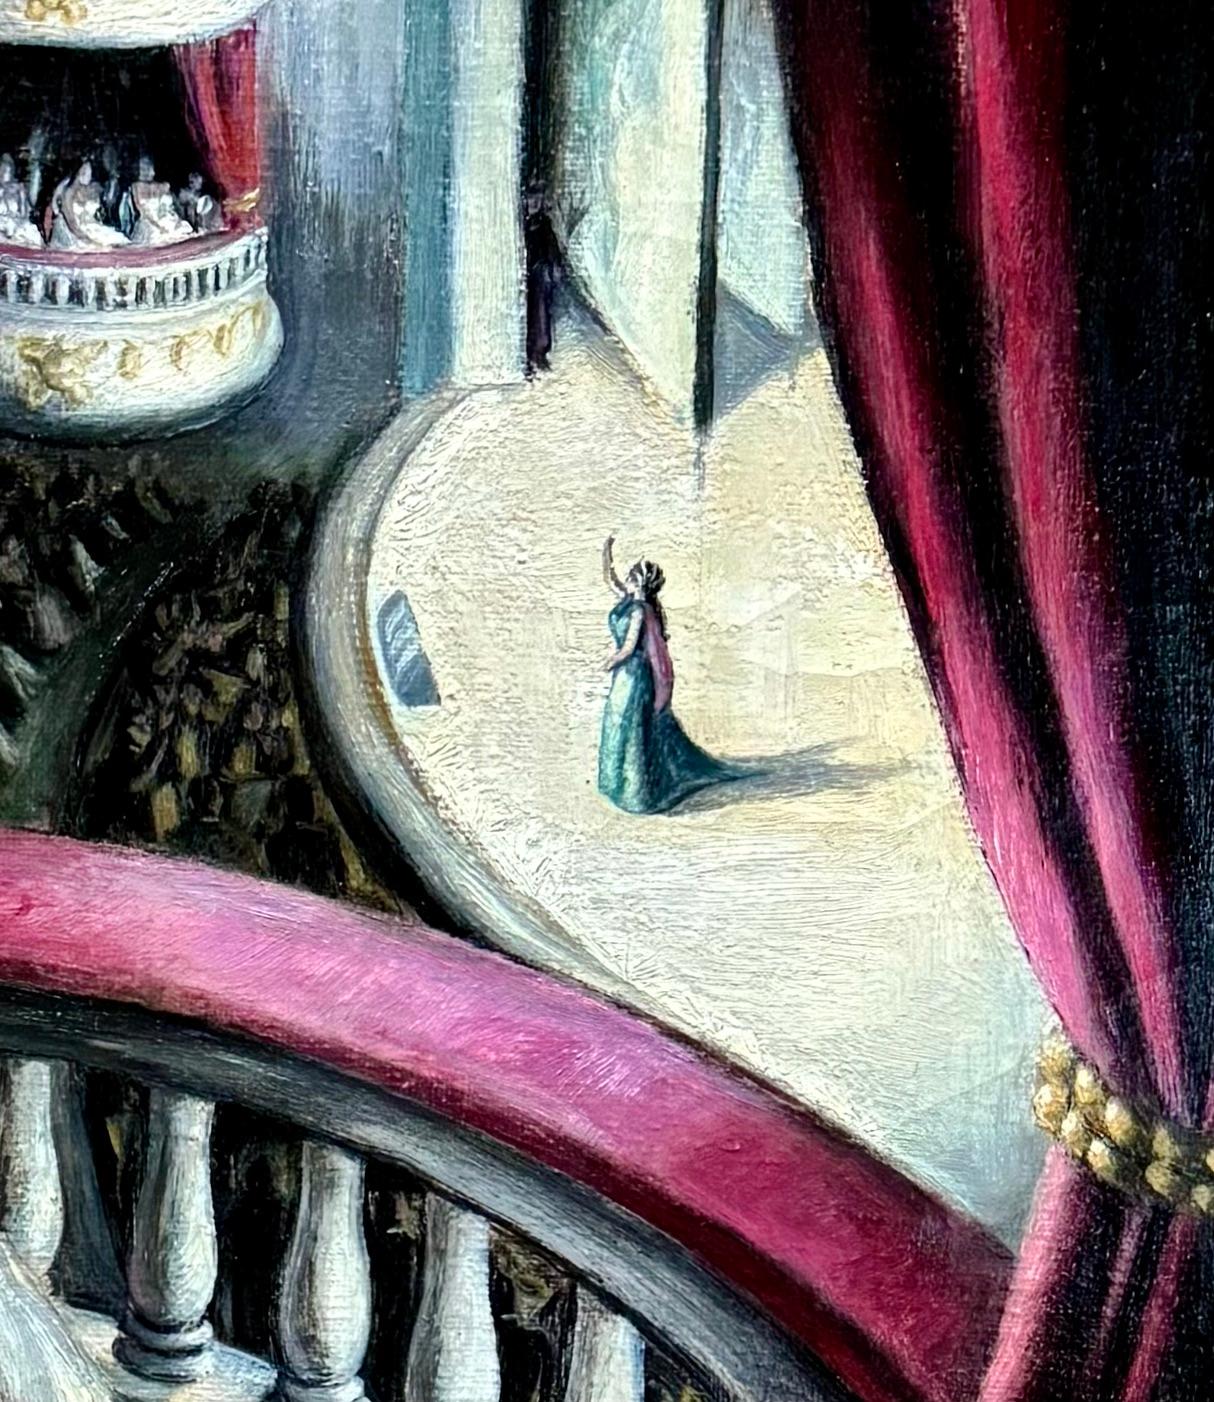 „At the Opera“ WPA Sozialer Realismus Mitte des 20. Jahrhunderts Moderne amerikanische Theaterszene

John Winters (1904 - 1983)
